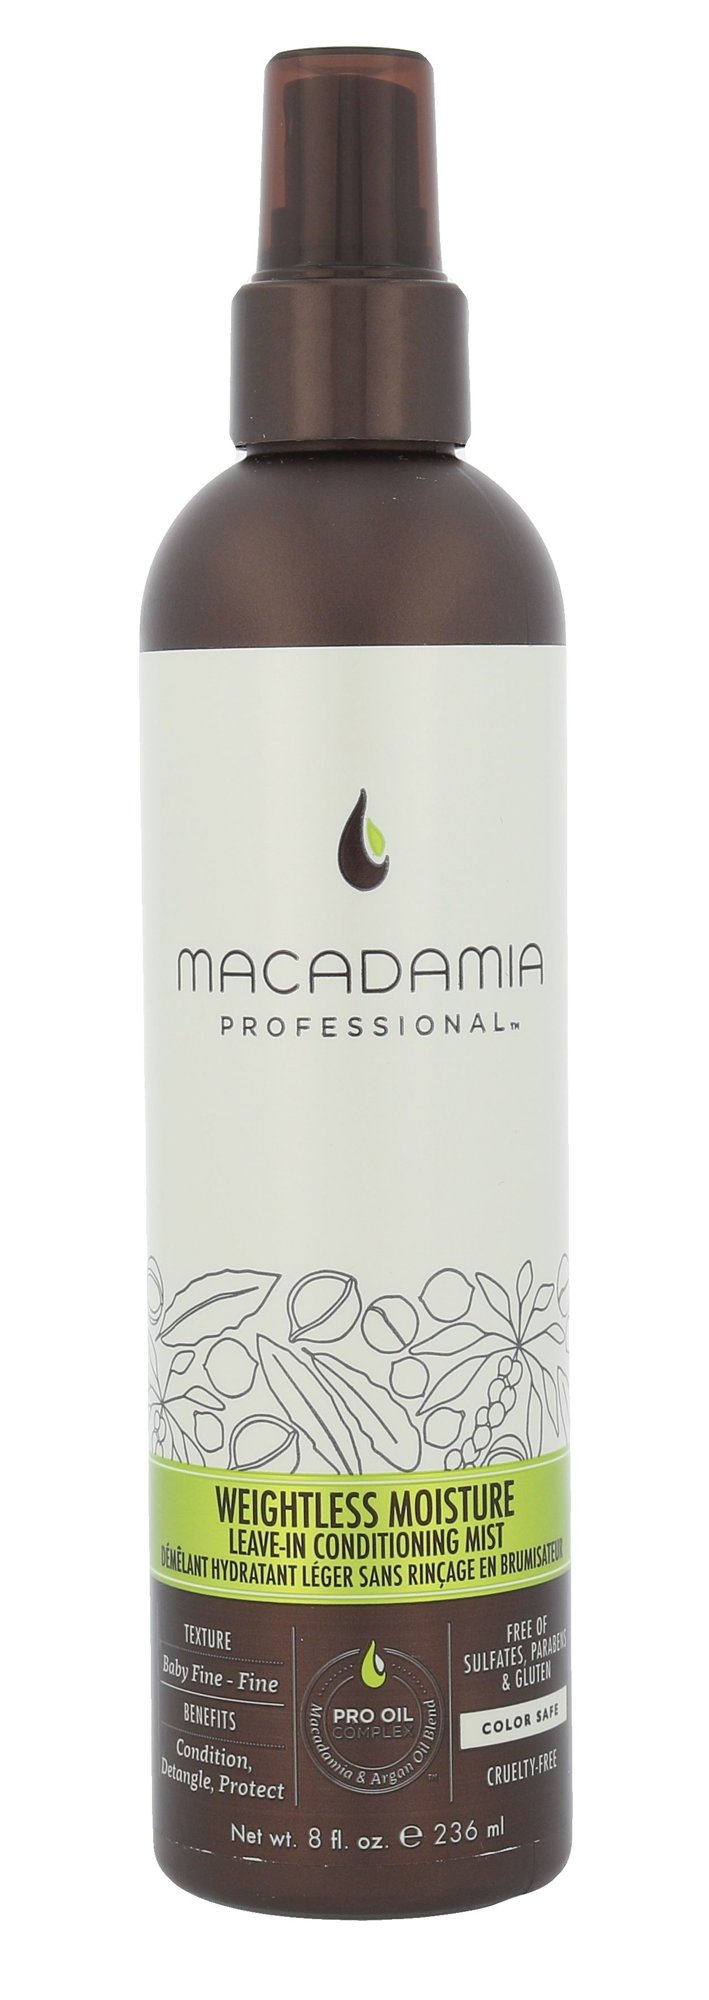 Macadamia Weightless Moisture Leave-In Conditioning Mist